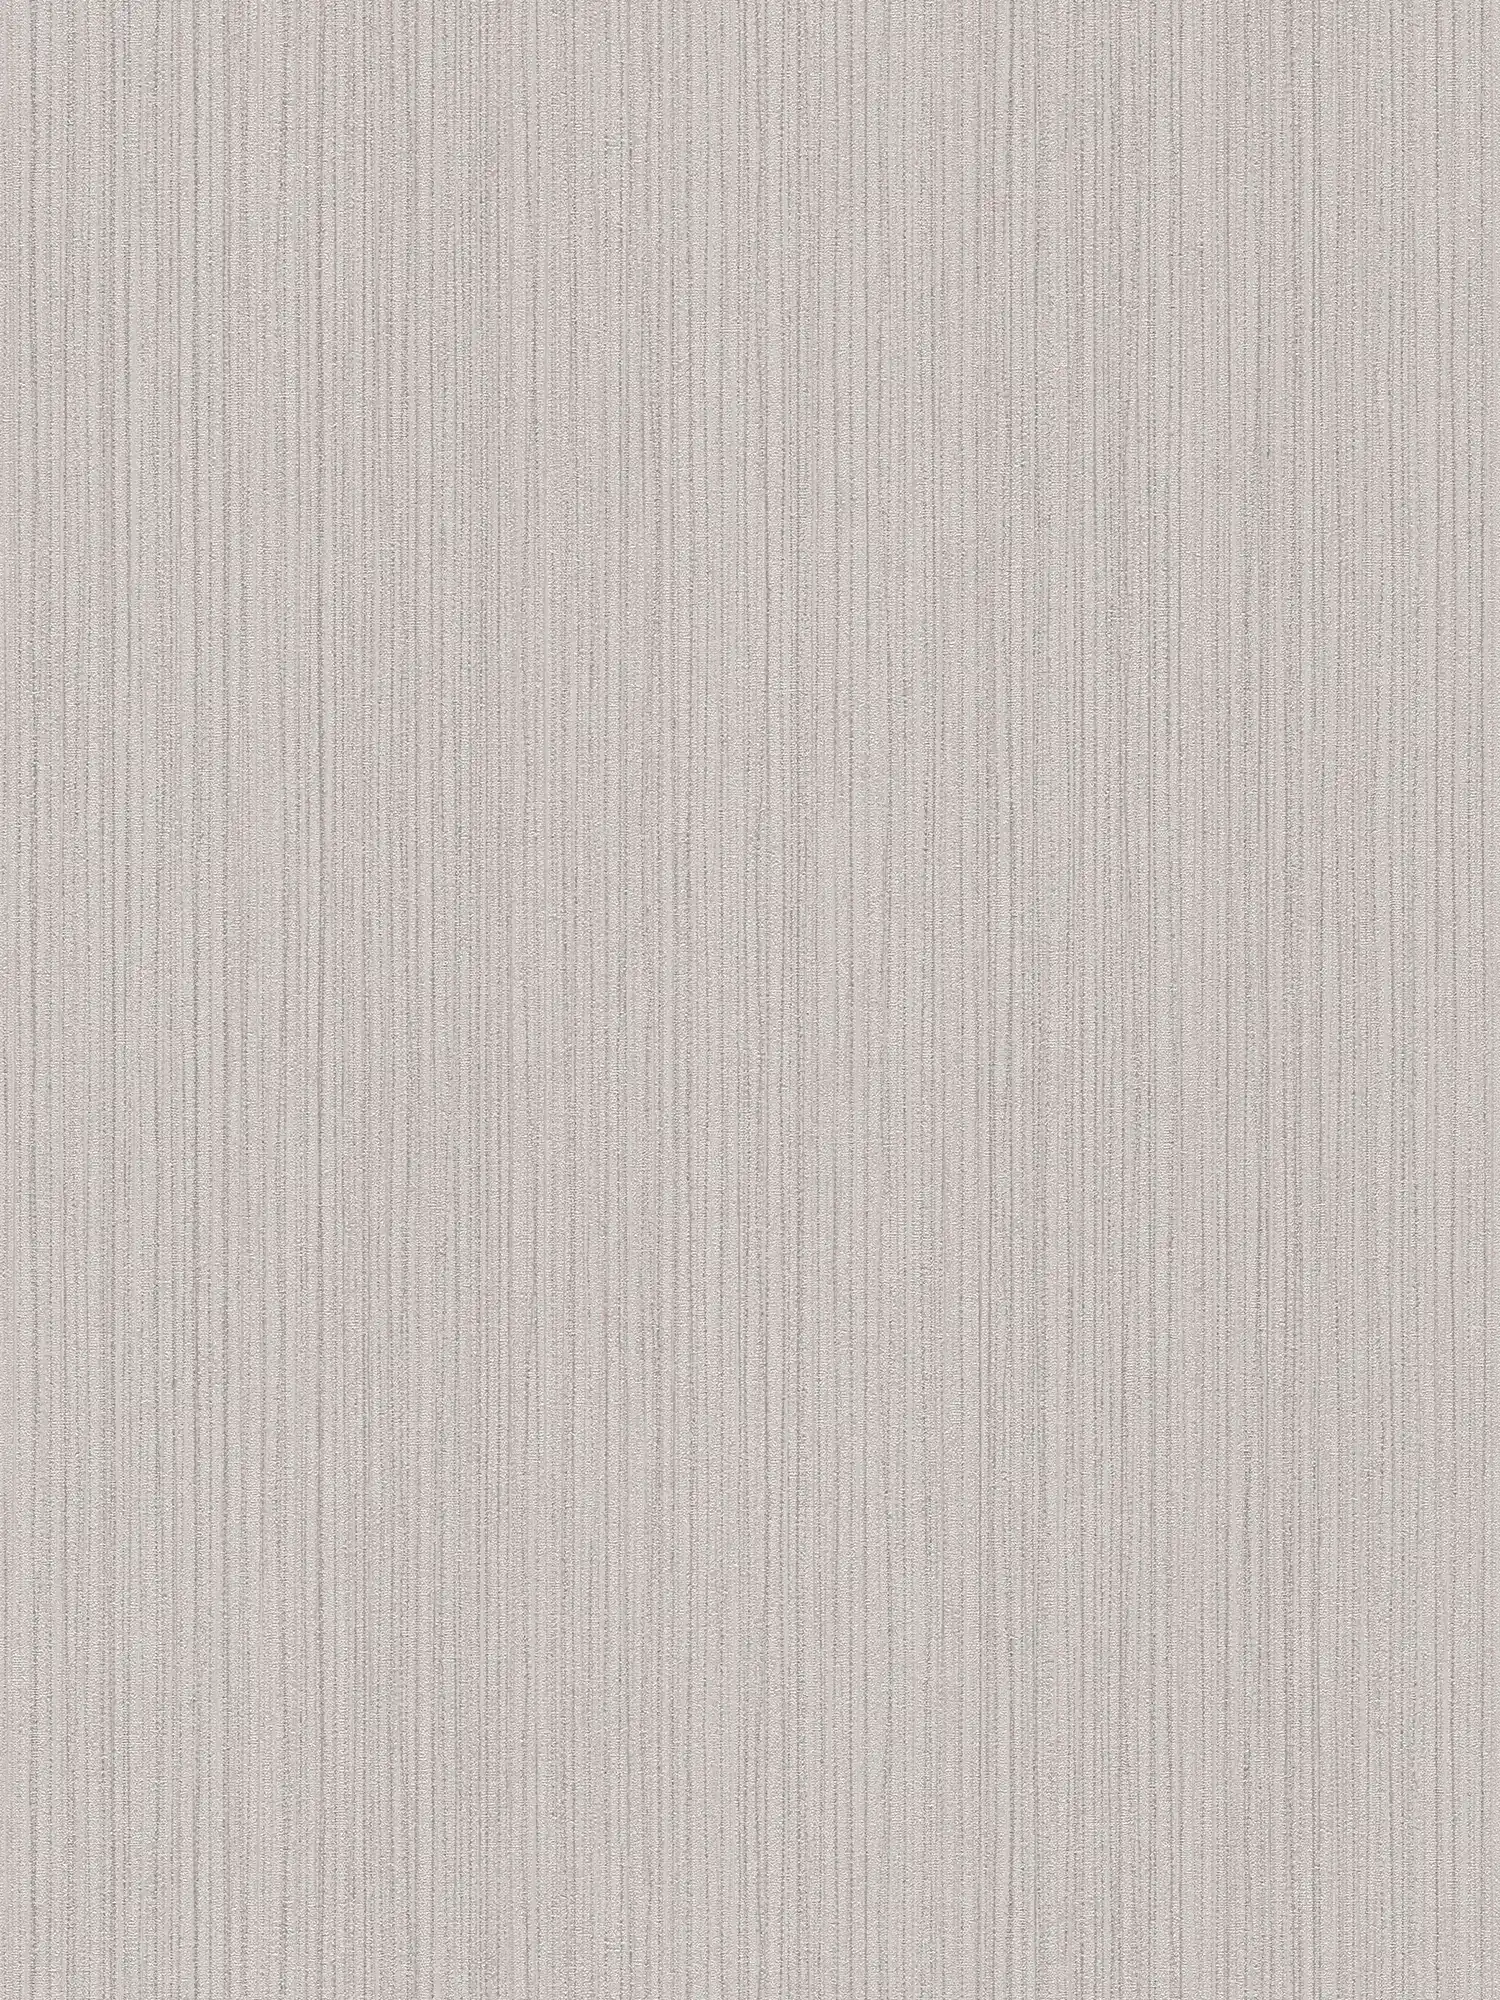 Greige wallpaper metallic luster and line pattern - grey
